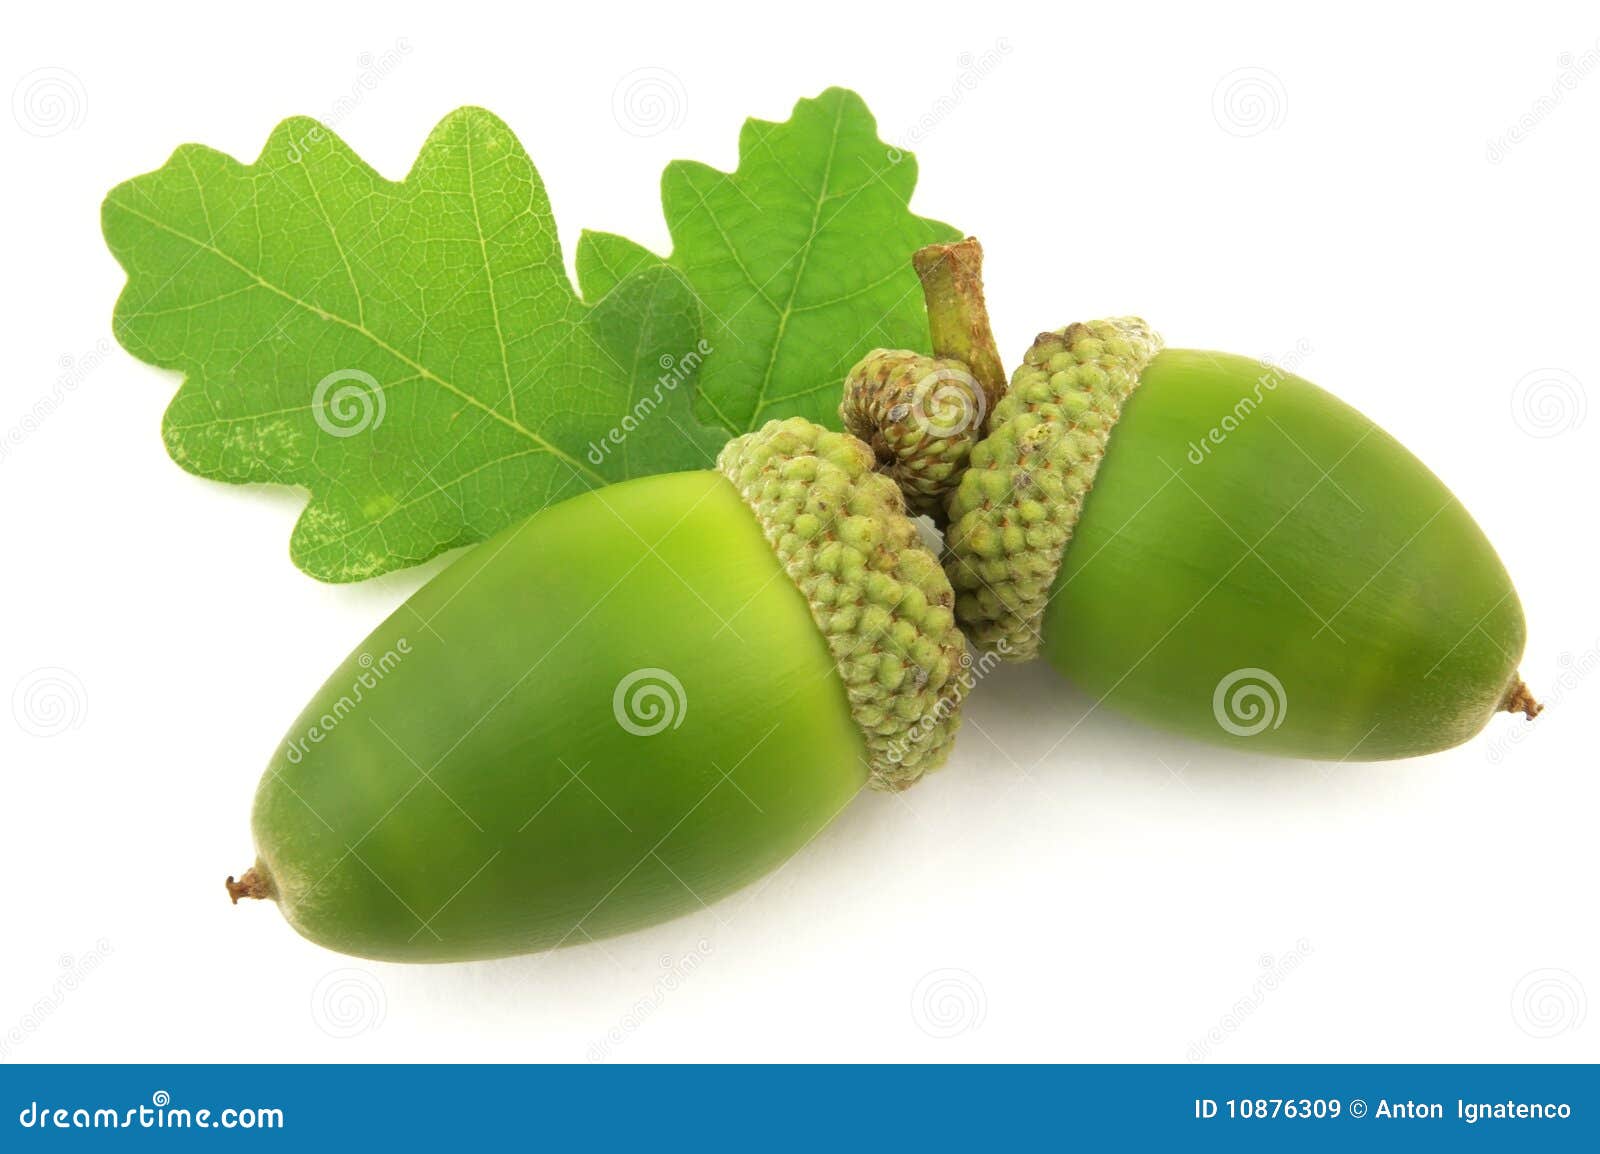 acorns with leaf